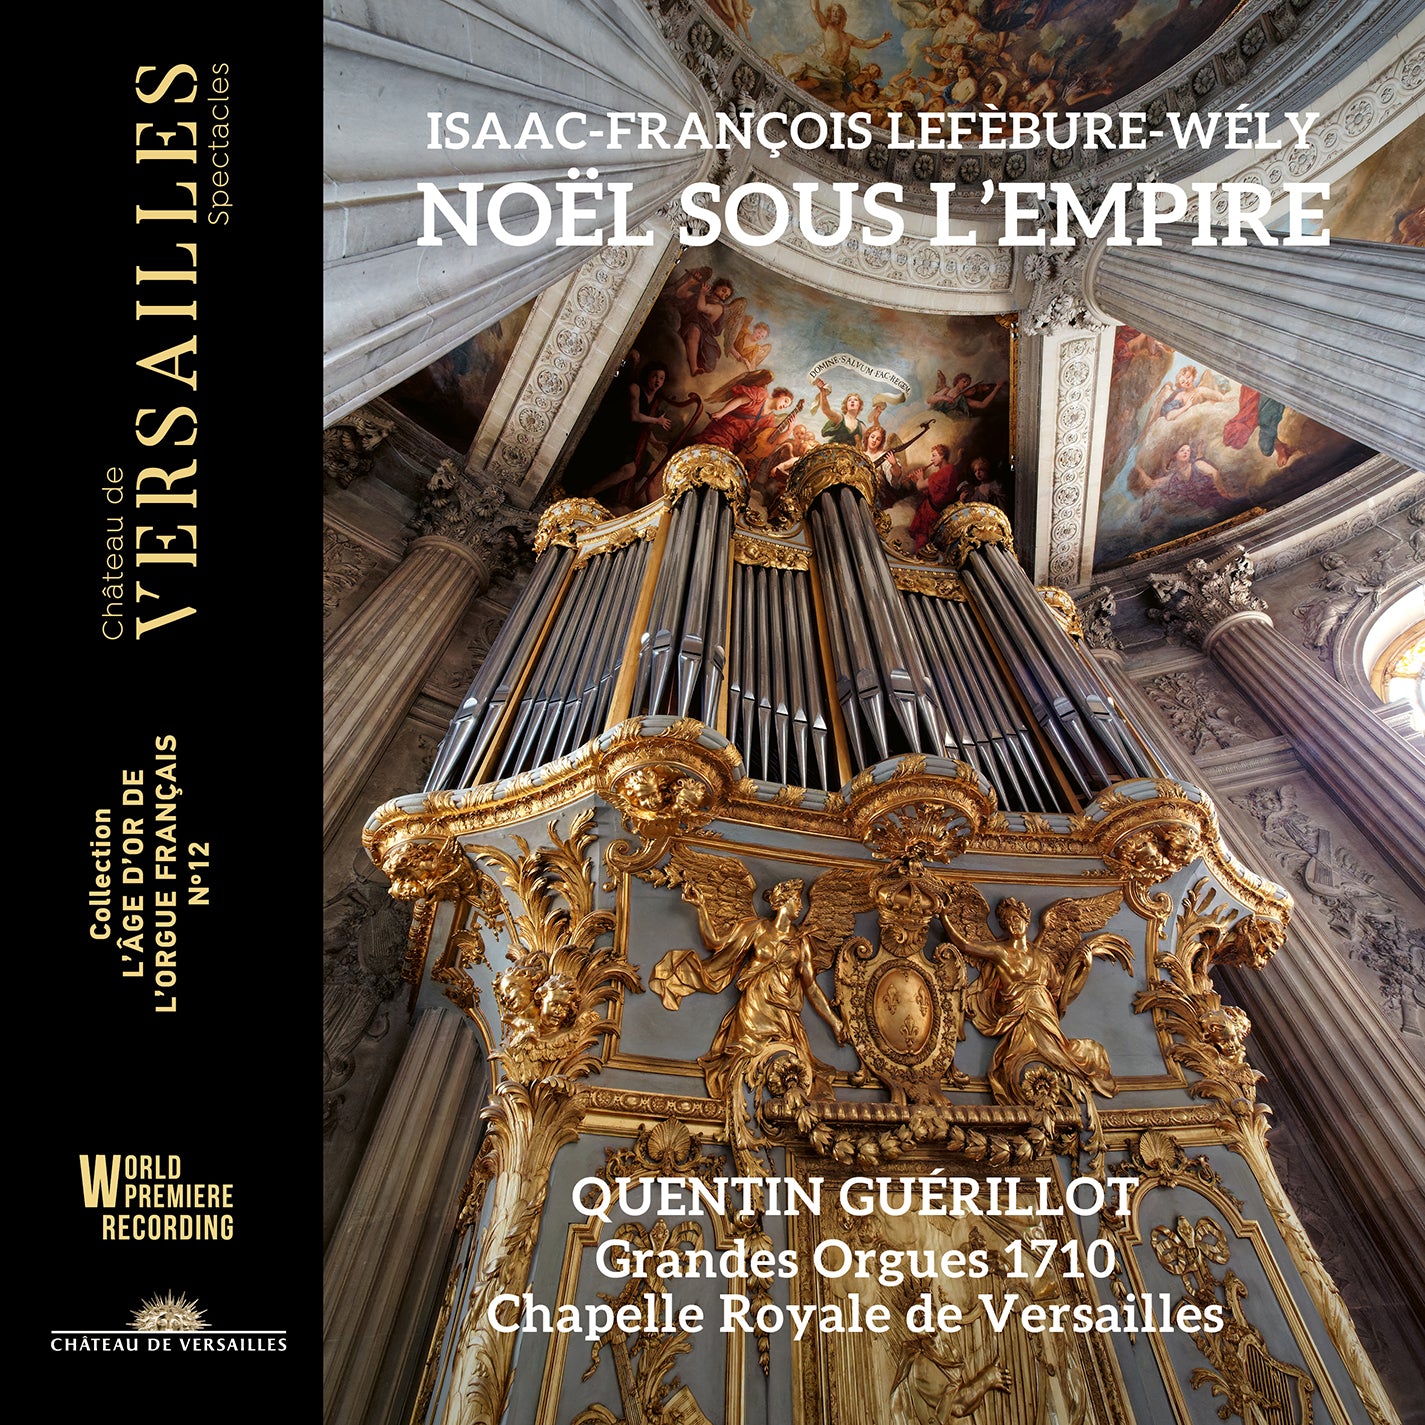 Charpentier, Cherubini & Lefebure-Wely: Noel sous l’empire / Guerillot